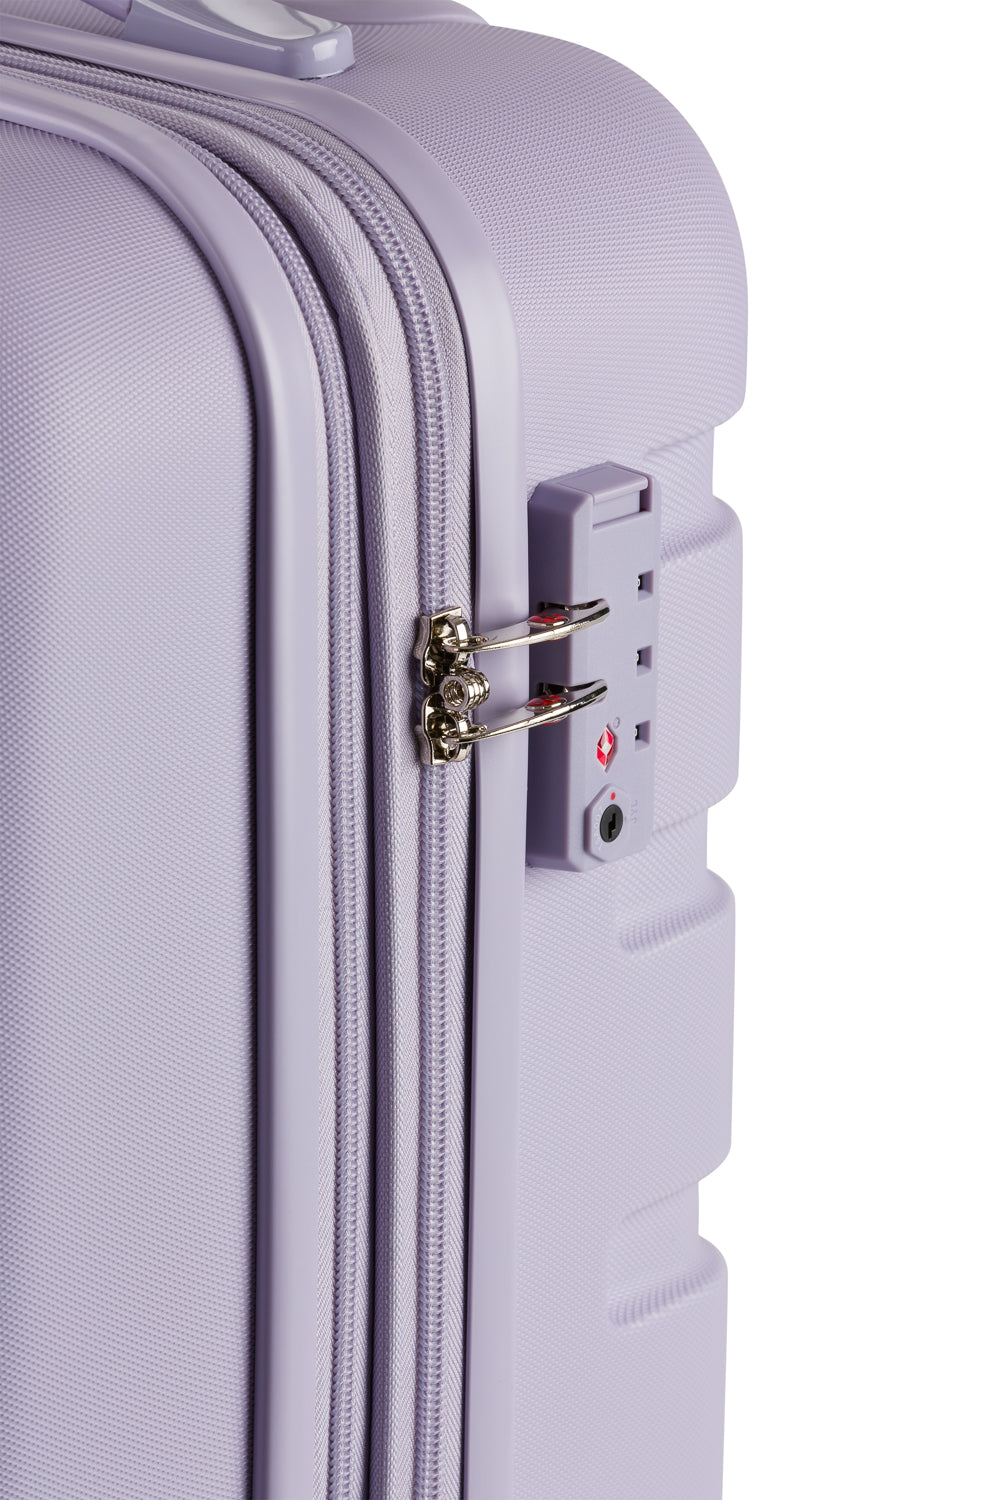 SwissGear 7366 23" Expandable Hardside Spinner Suitcase